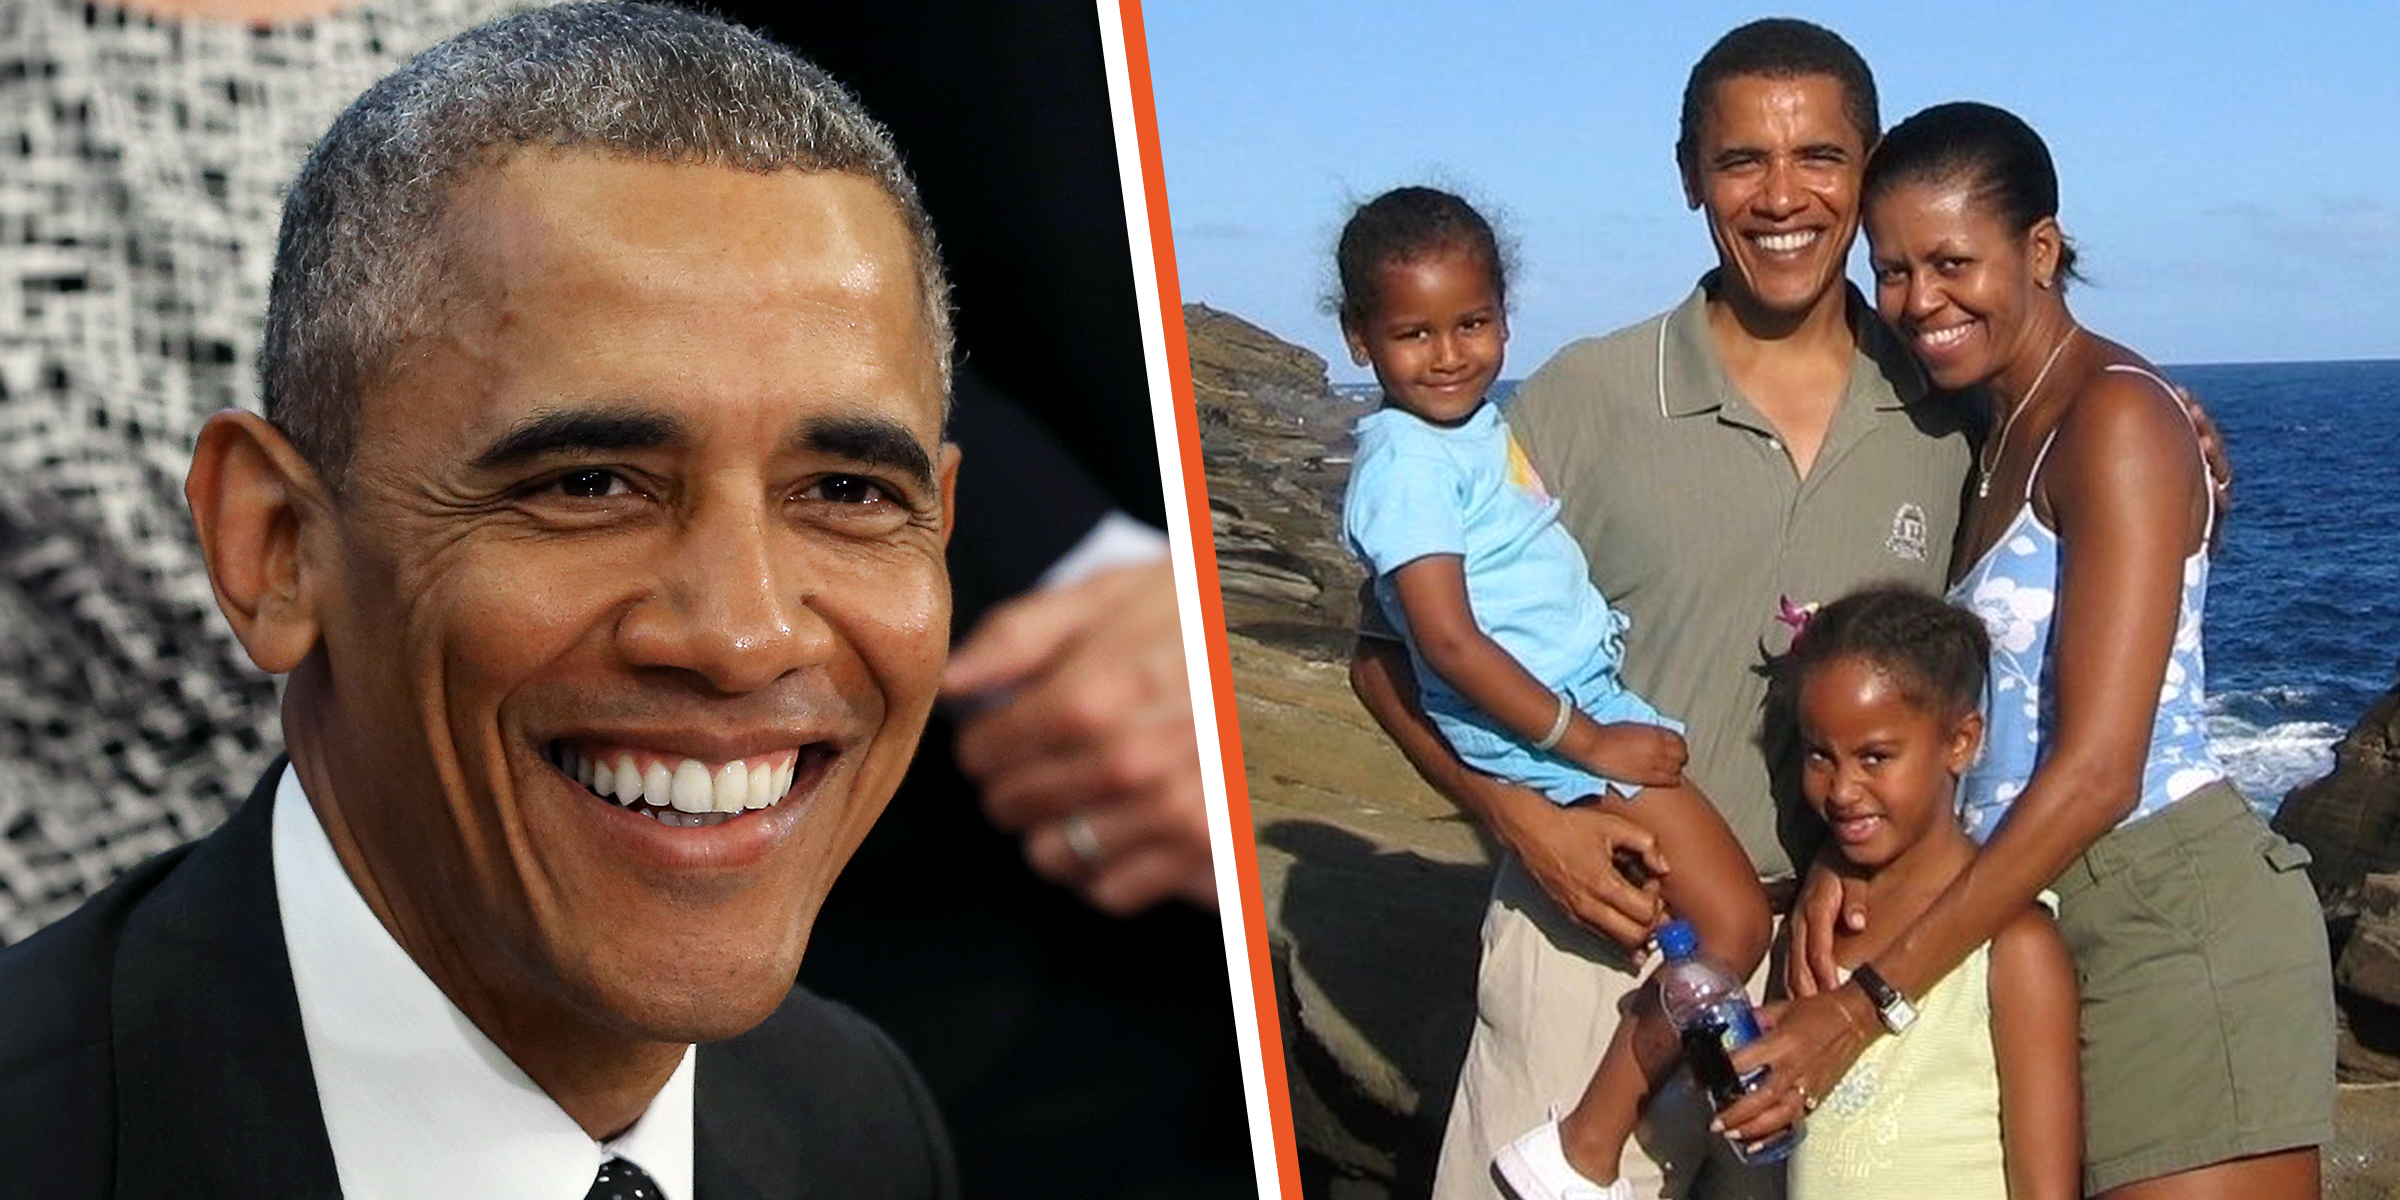 Barack Obama | Barack, Michelle, Malia, and Sasha Obama | Source: Getty Images | Instagram.com/michelleobama